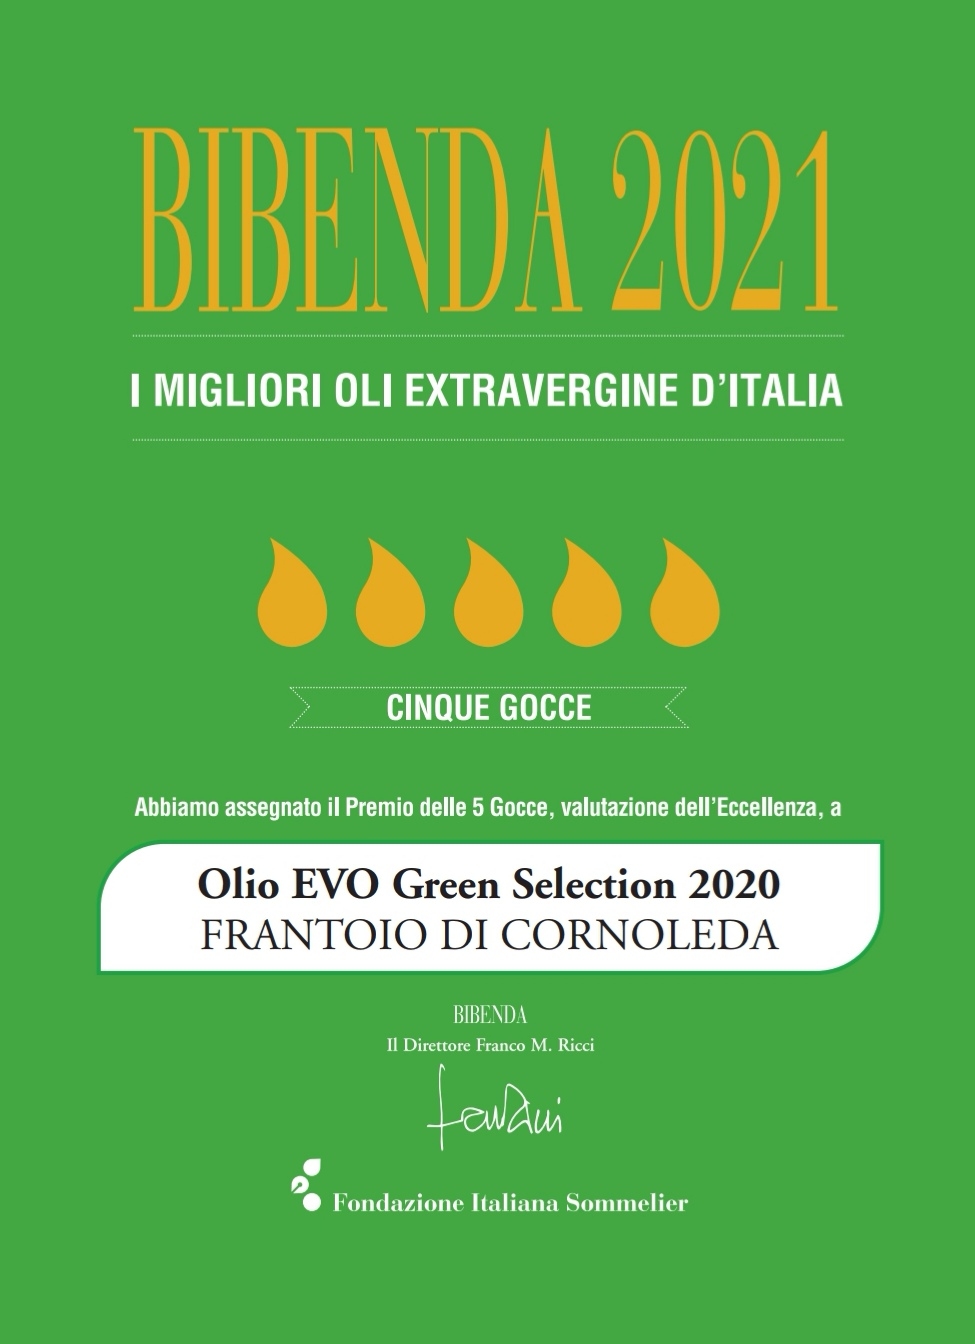 5 GOCCE BIBENDA 2021 PER IL GREEN SELECTION